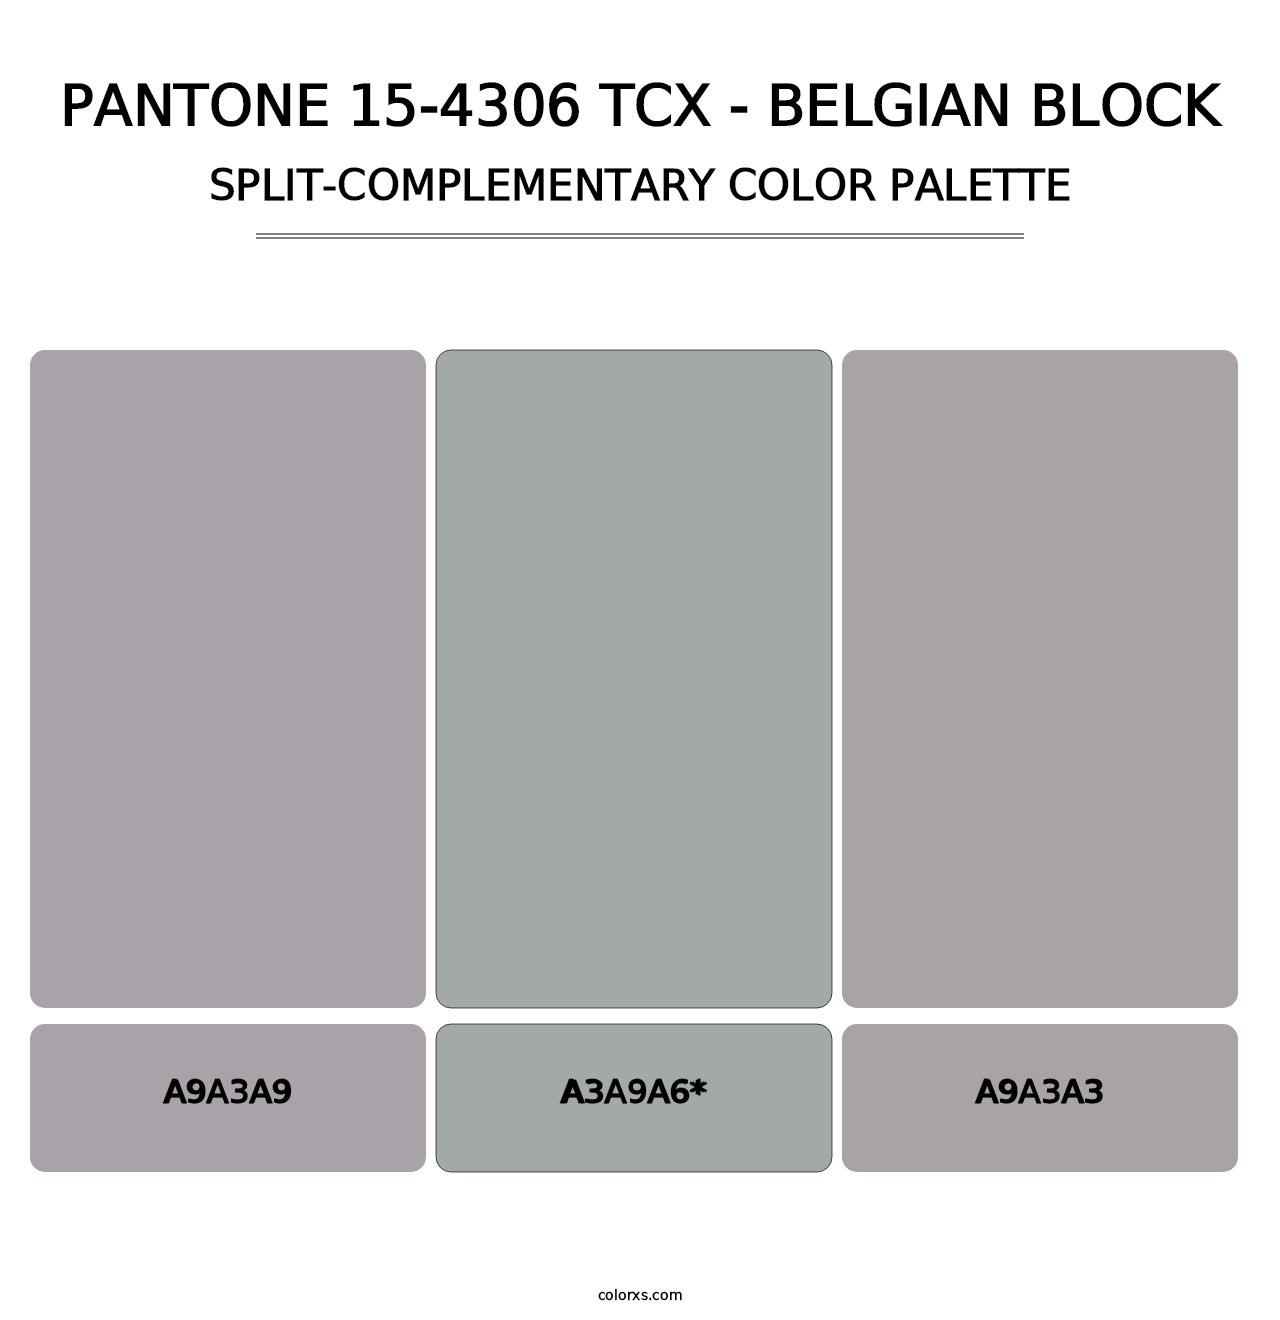 PANTONE 15-4306 TCX - Belgian Block - Split-Complementary Color Palette